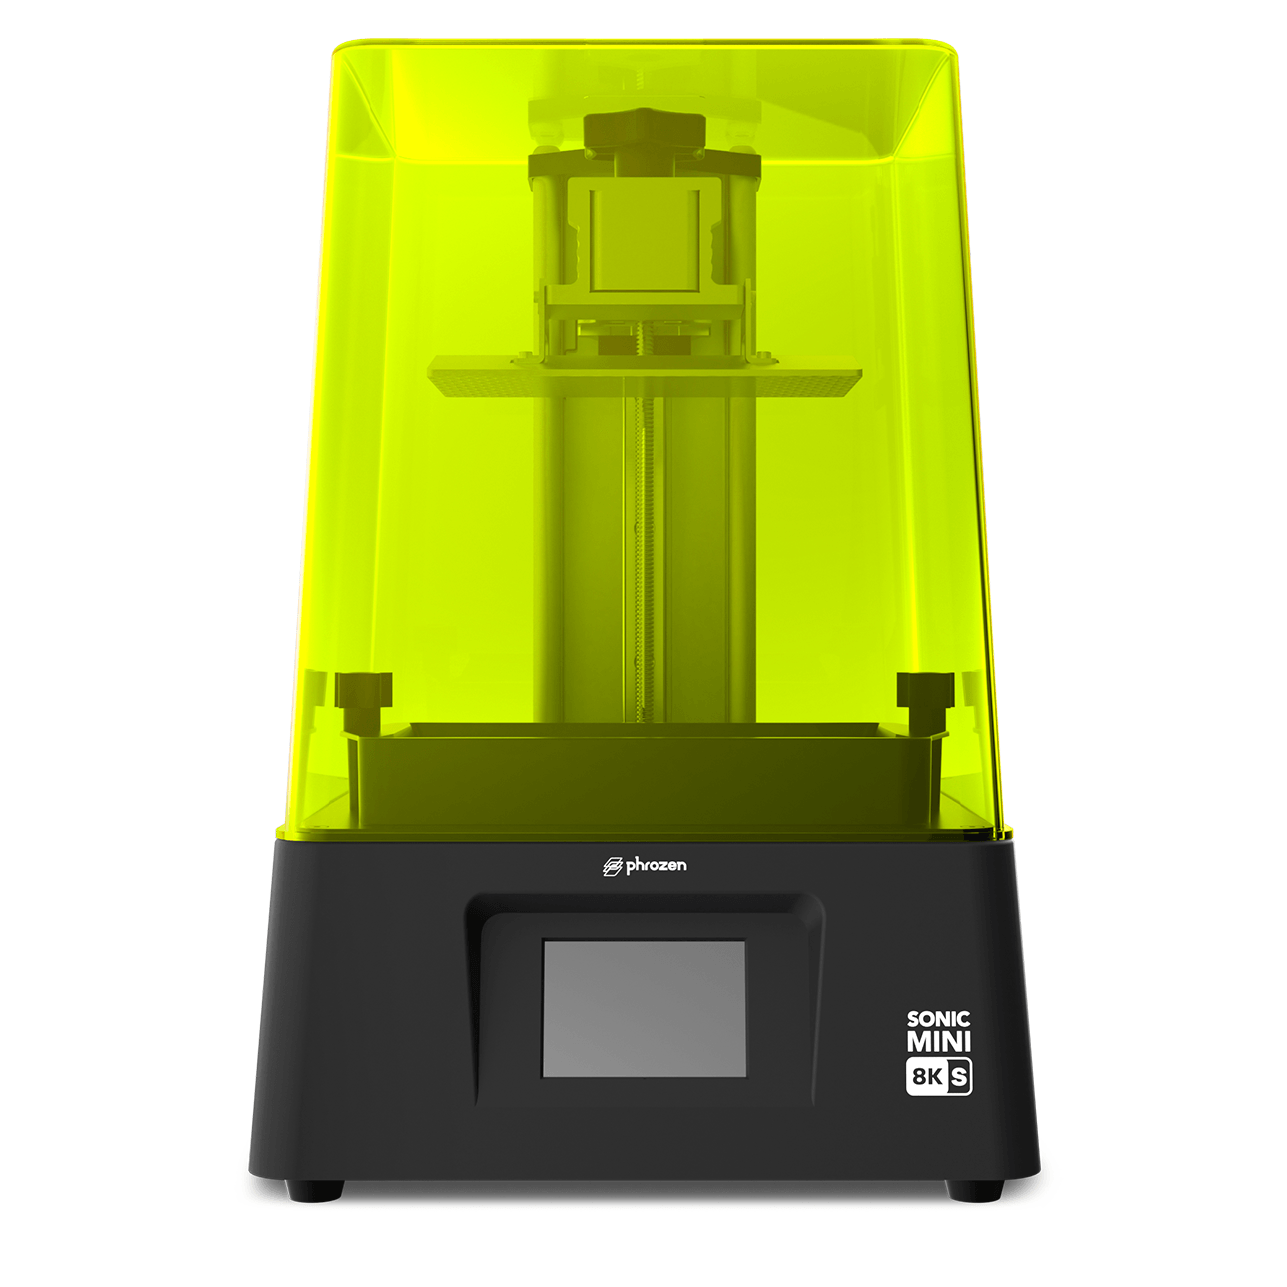 3D Printers - Phrozen Sonic Mini 8K S